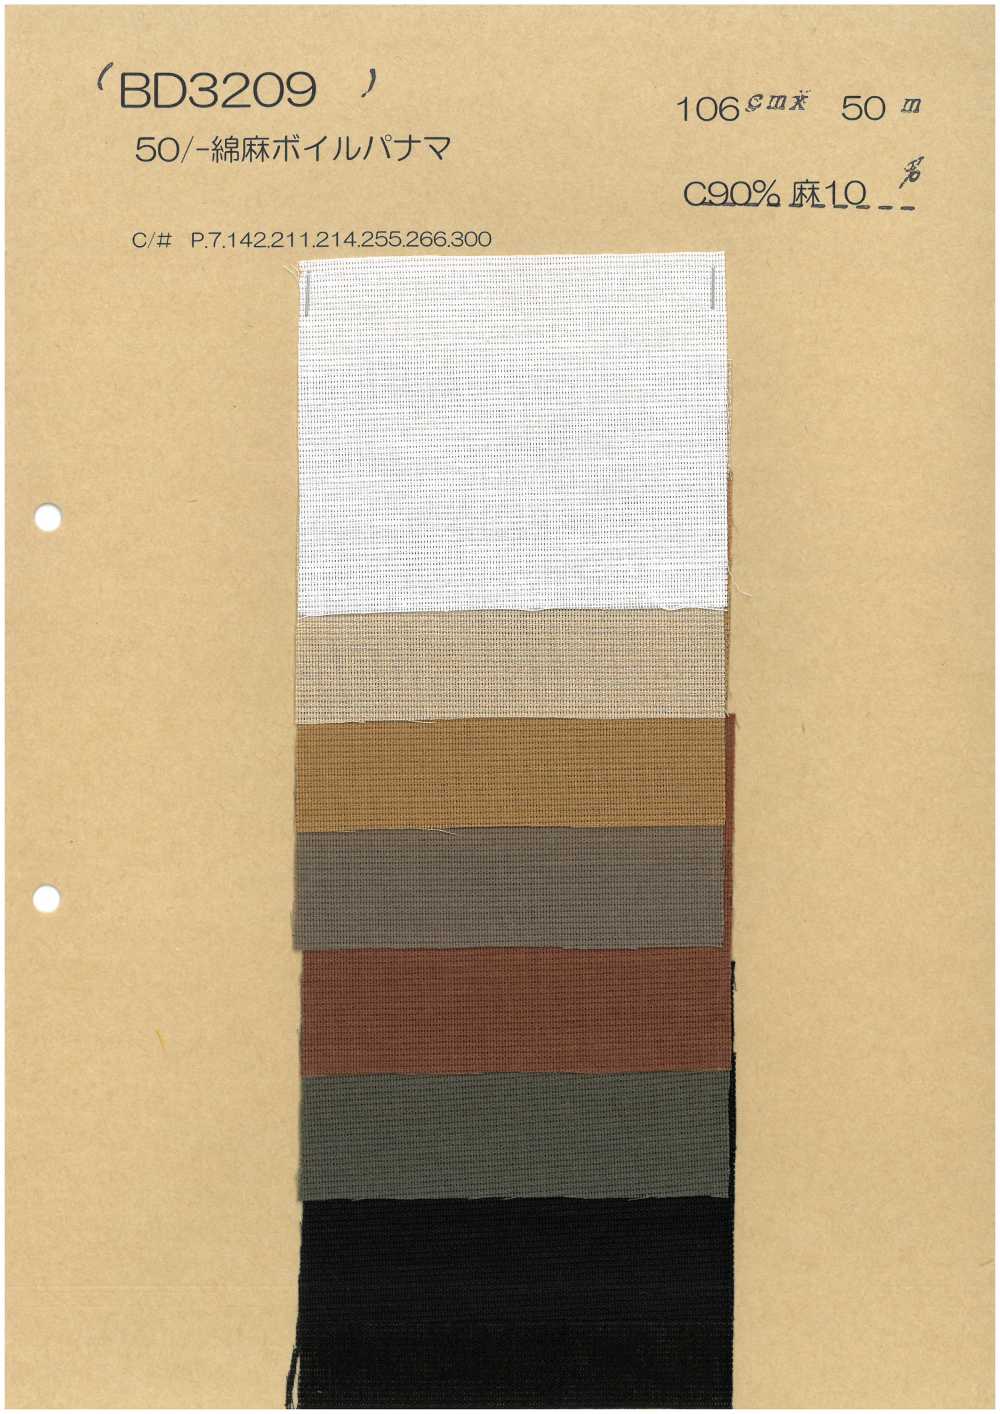 BD3209 [OUTLET] Cotton Linen Panamaboiru[Textile / Fabric] COSMO TEXTILE